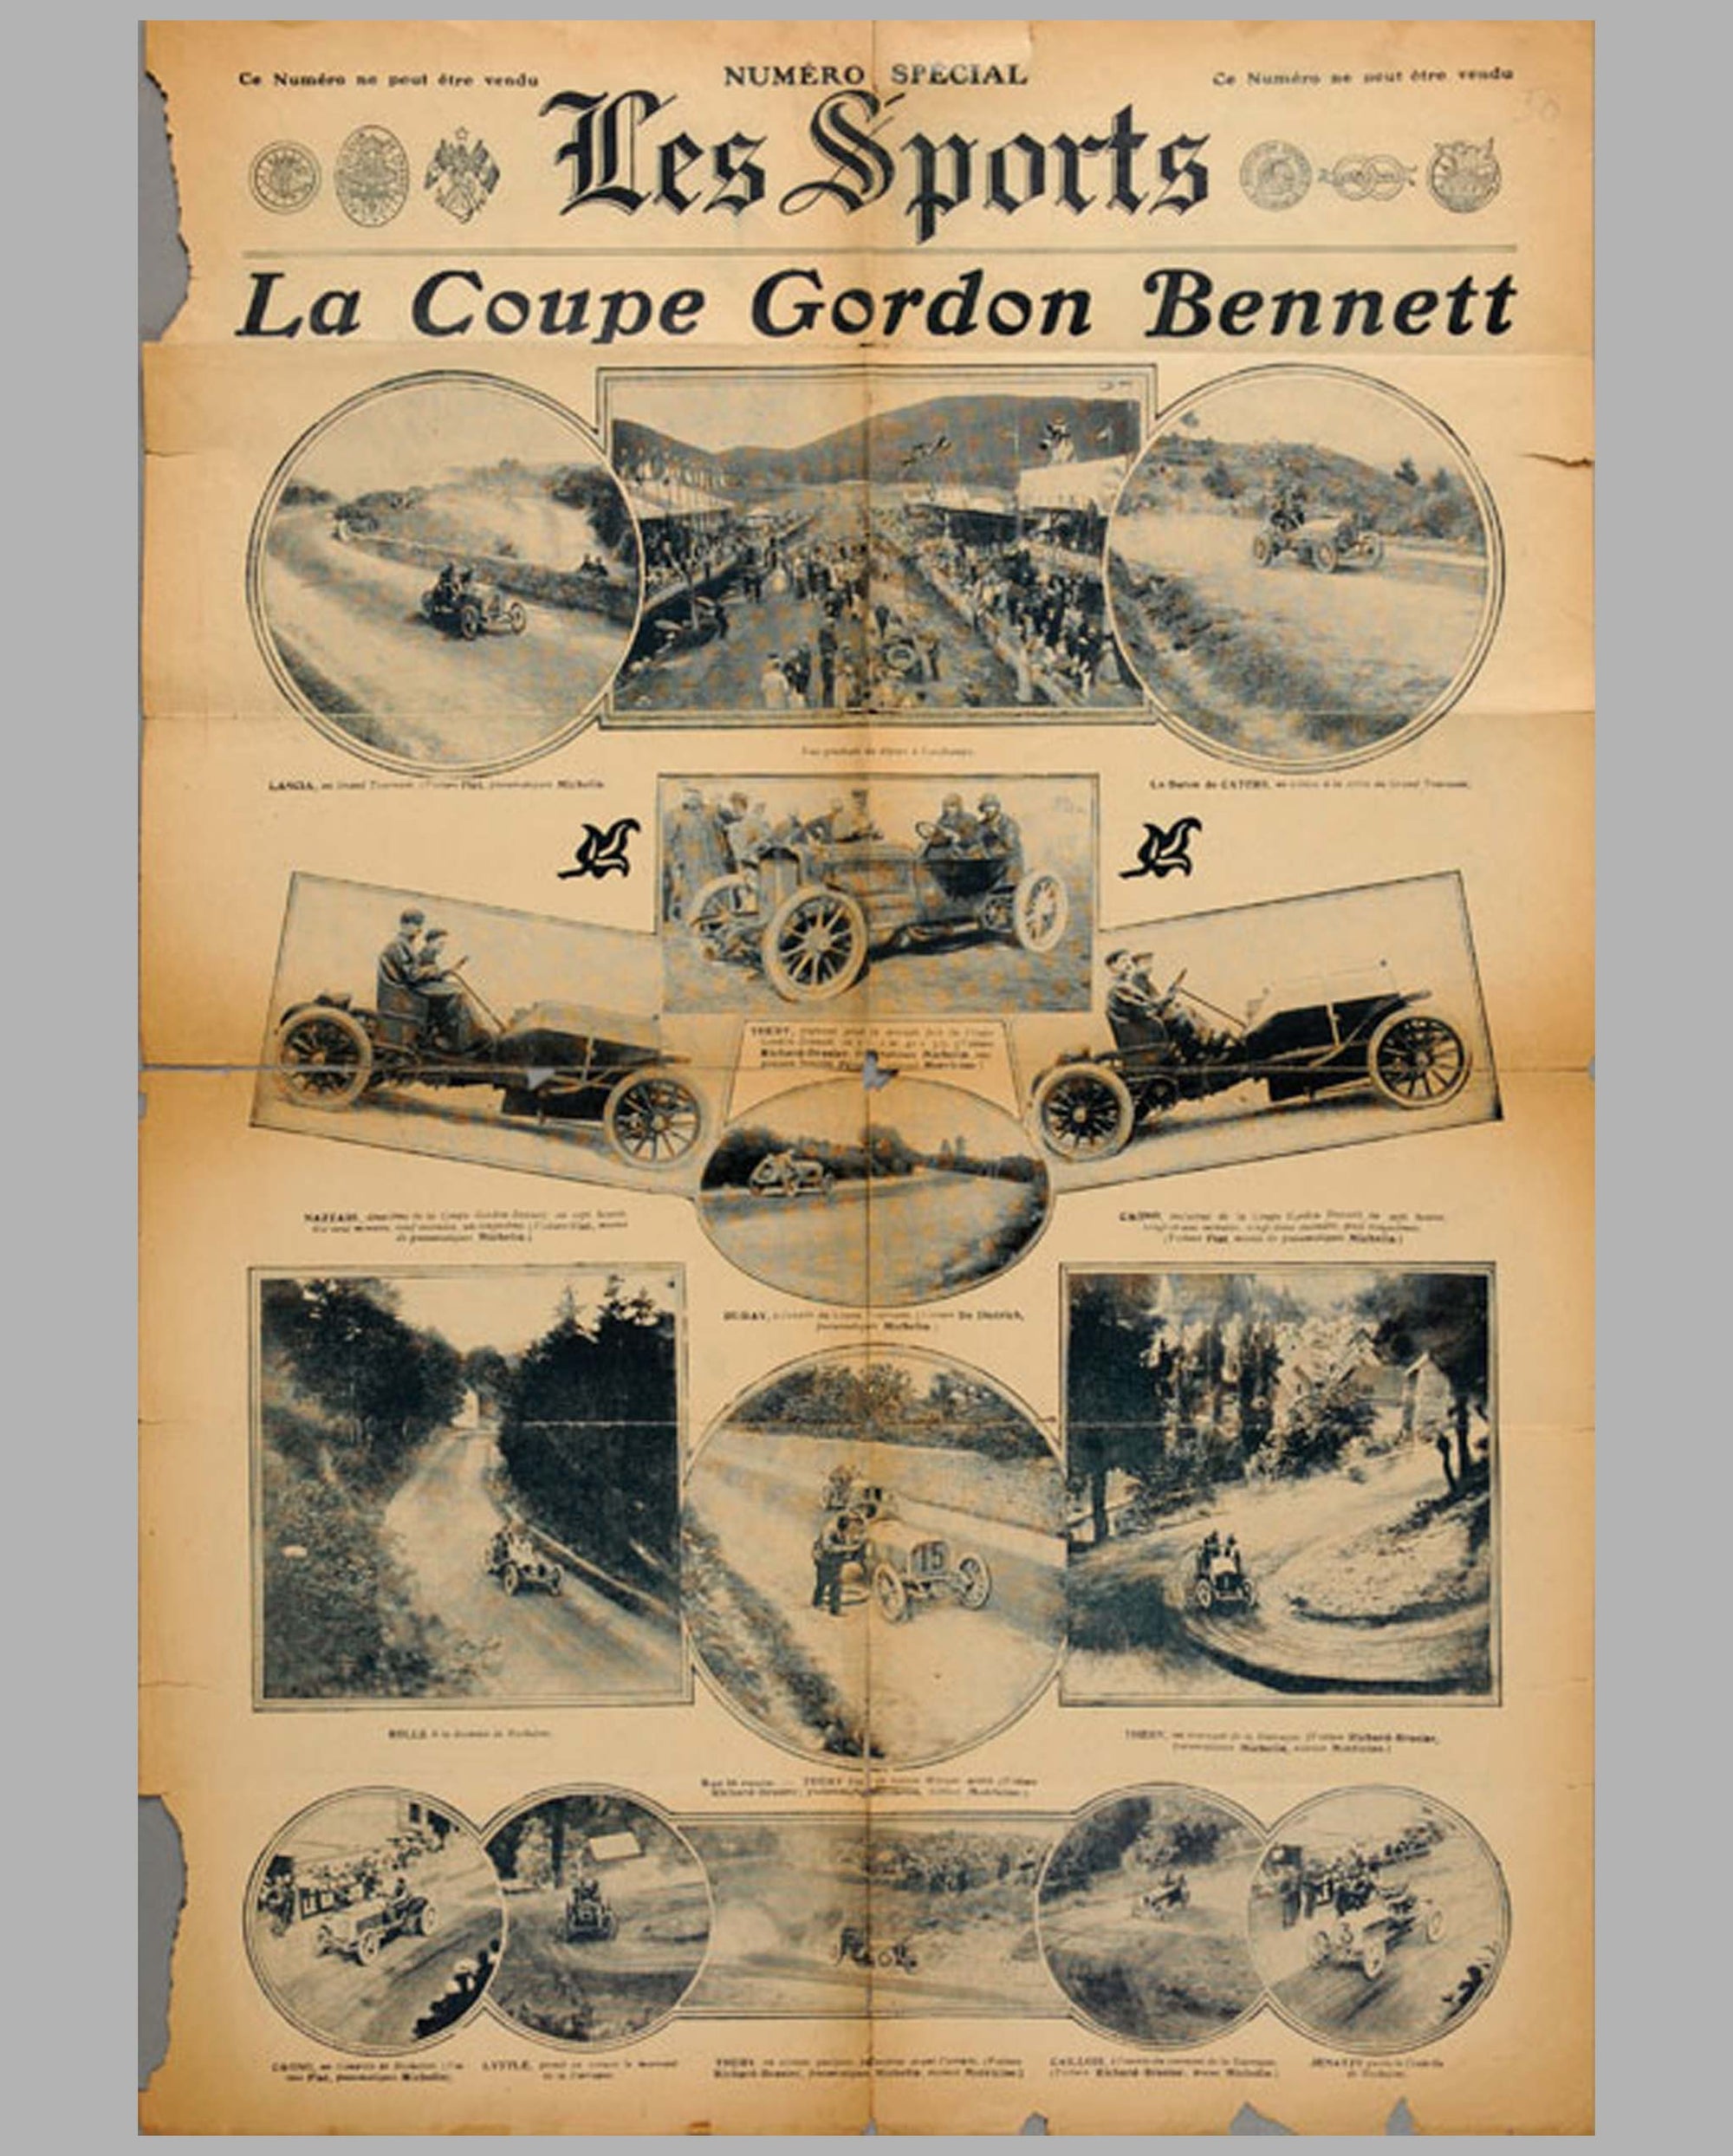 Les Sports-1905 La Coupe Gordon Bennett newspaper